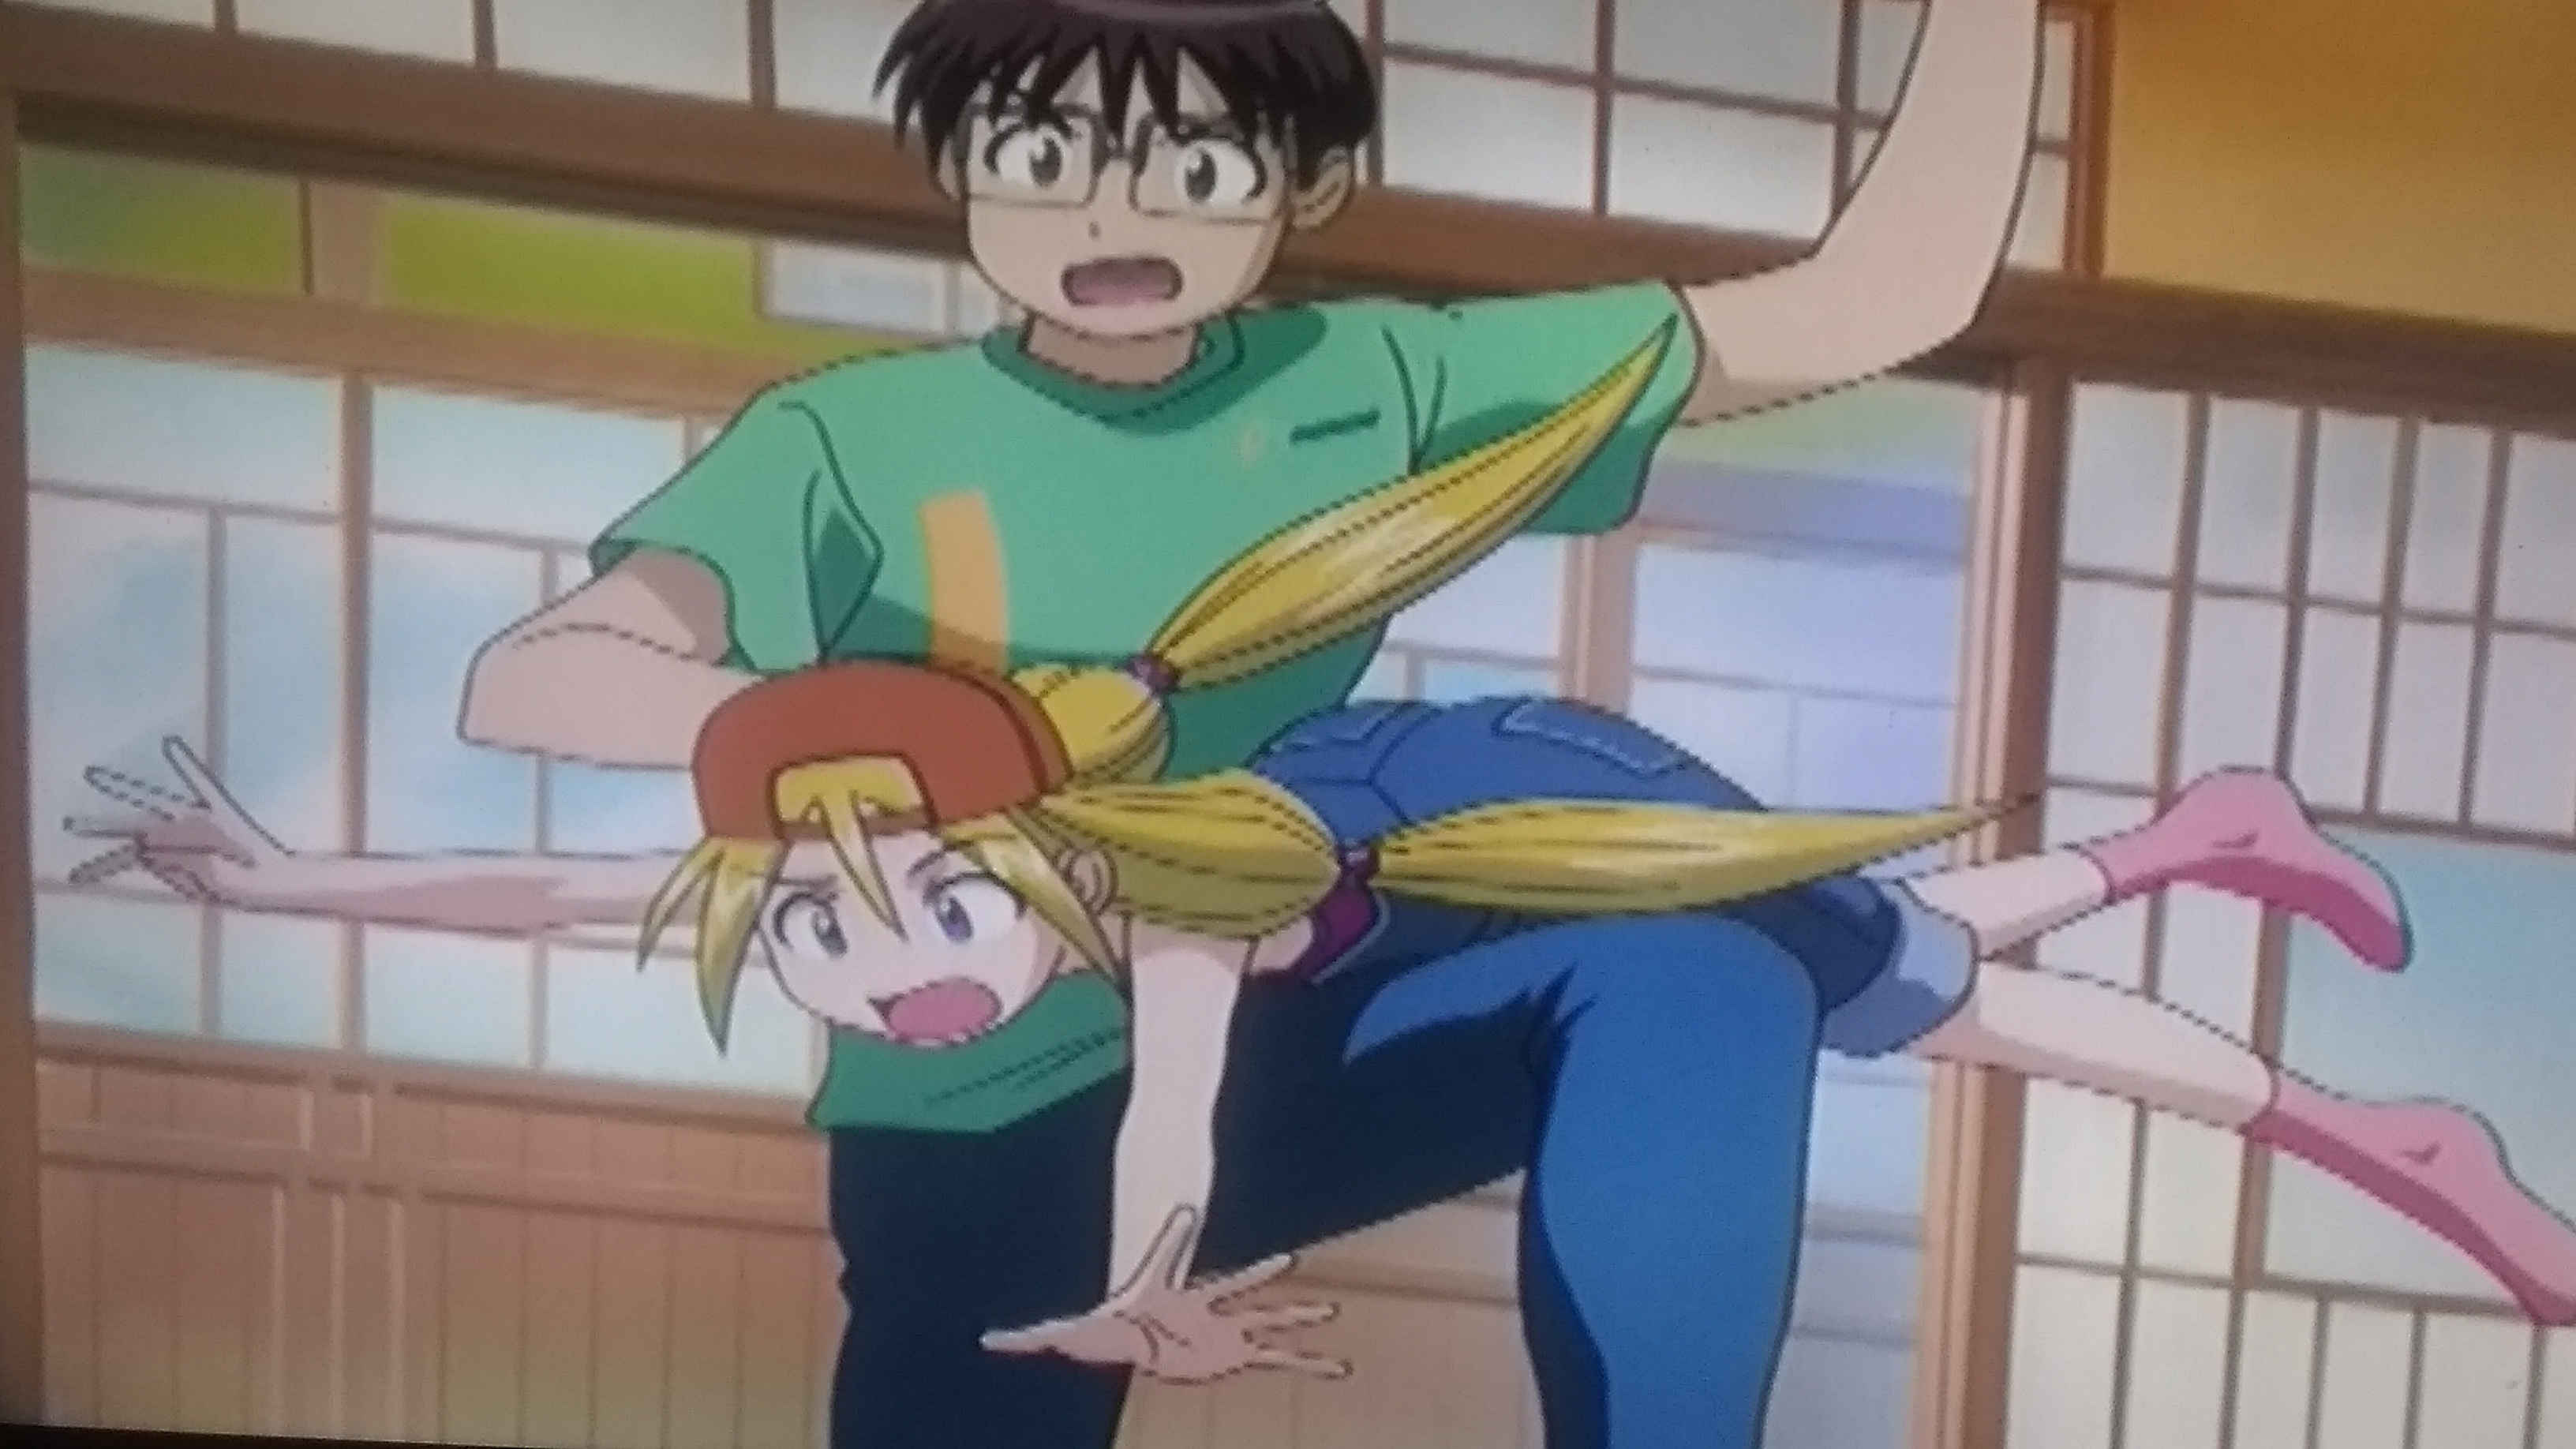 Love Hina Keitaro Urashima spanking Sarah McDougal - Anime Photo (42995482)  - Fanpop